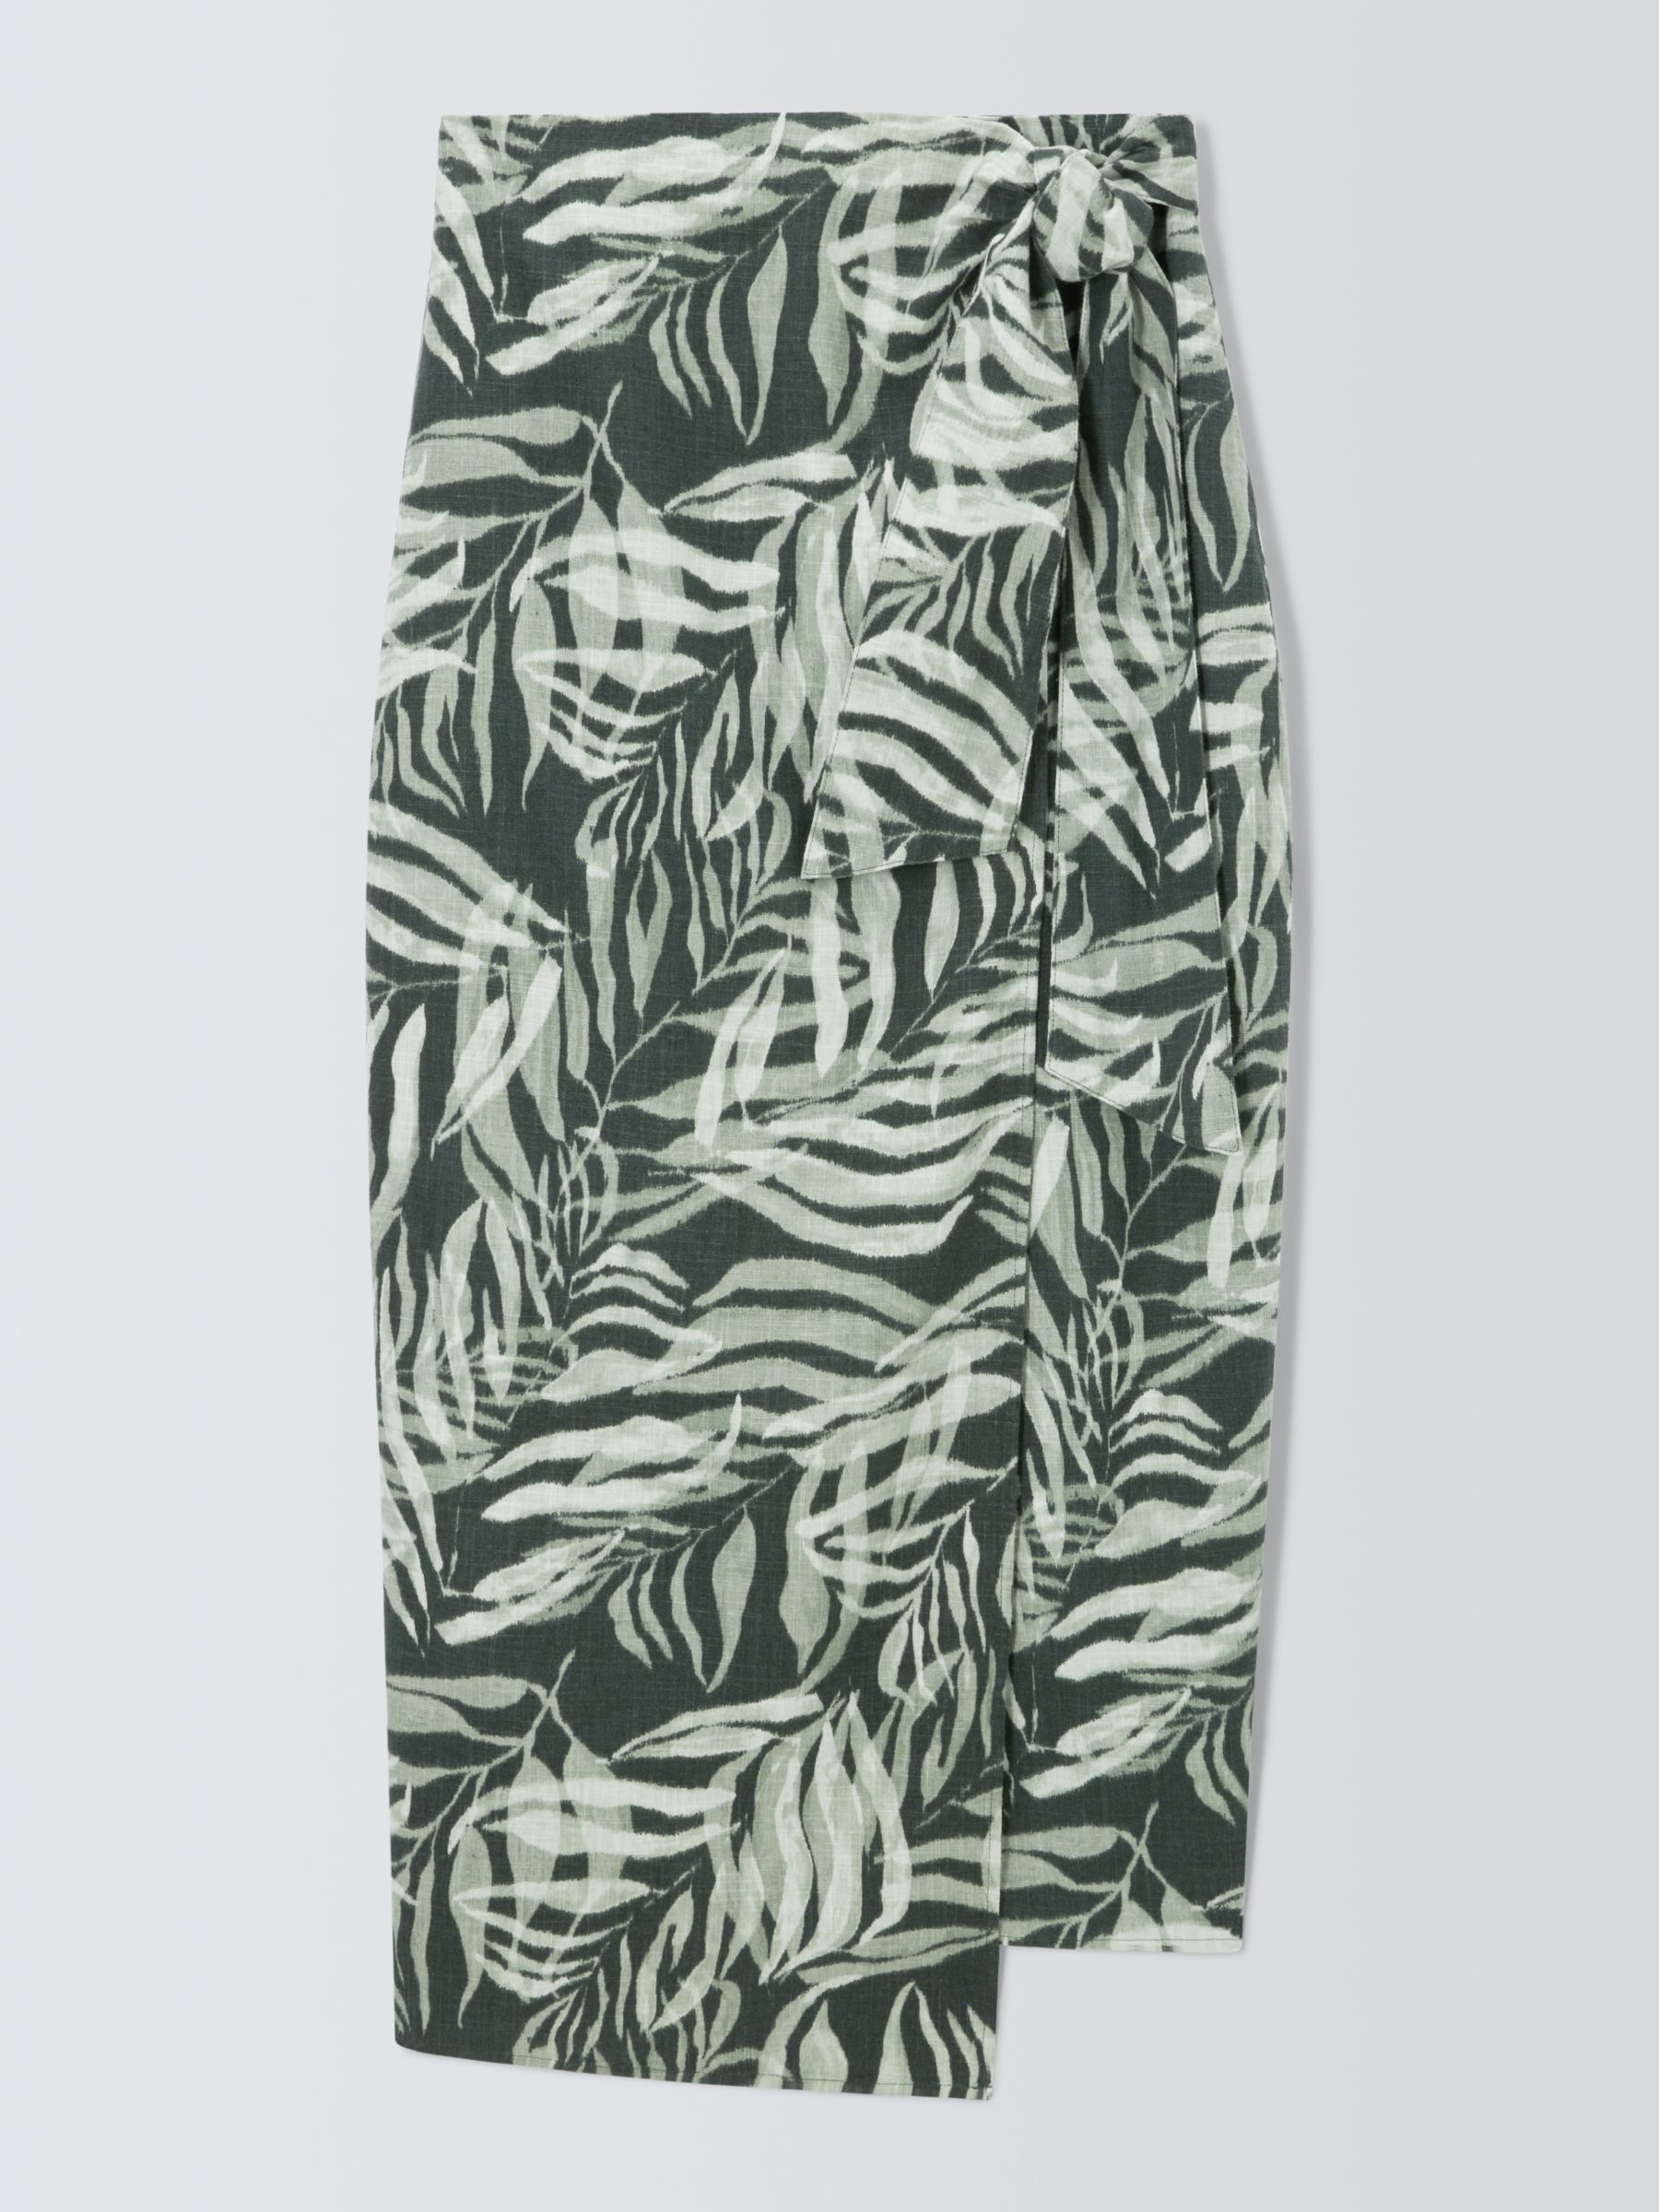 John Lewis Rio Palm Print Linen Blend Skirt, Green/Multi, 10